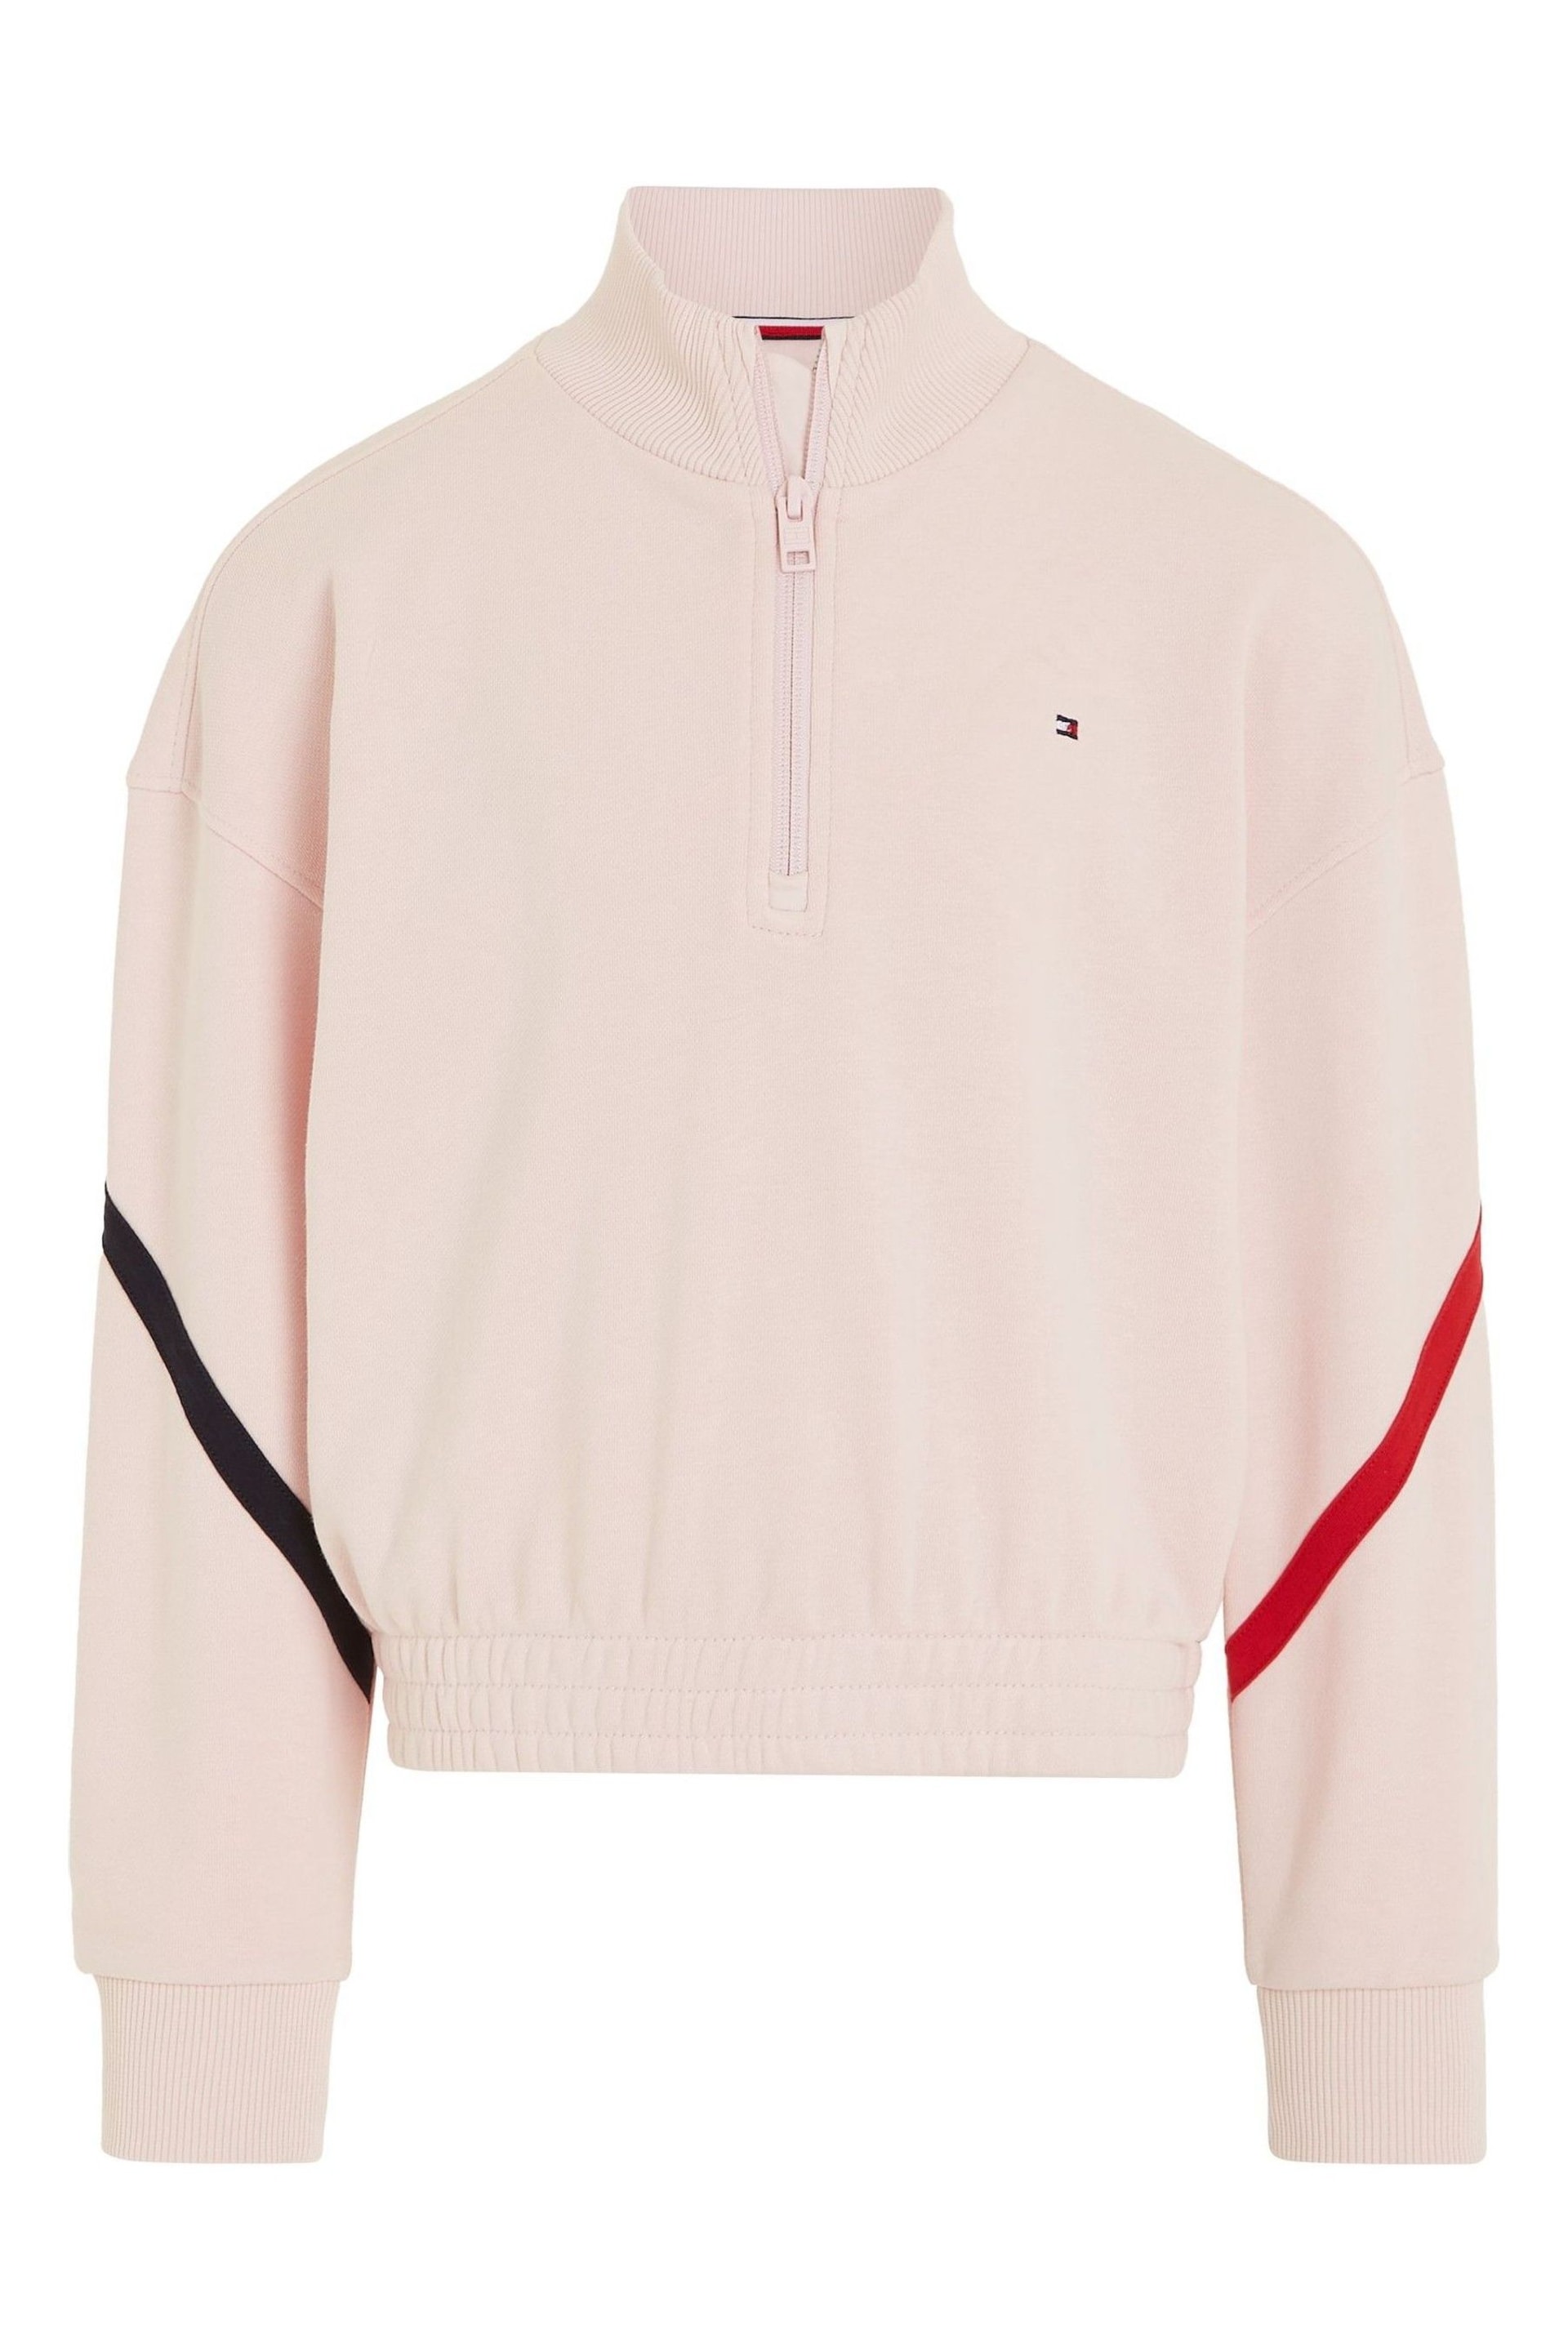 Tommy Hilfiger Pink Global Stripe Half Zip Sweater - Image 4 of 6